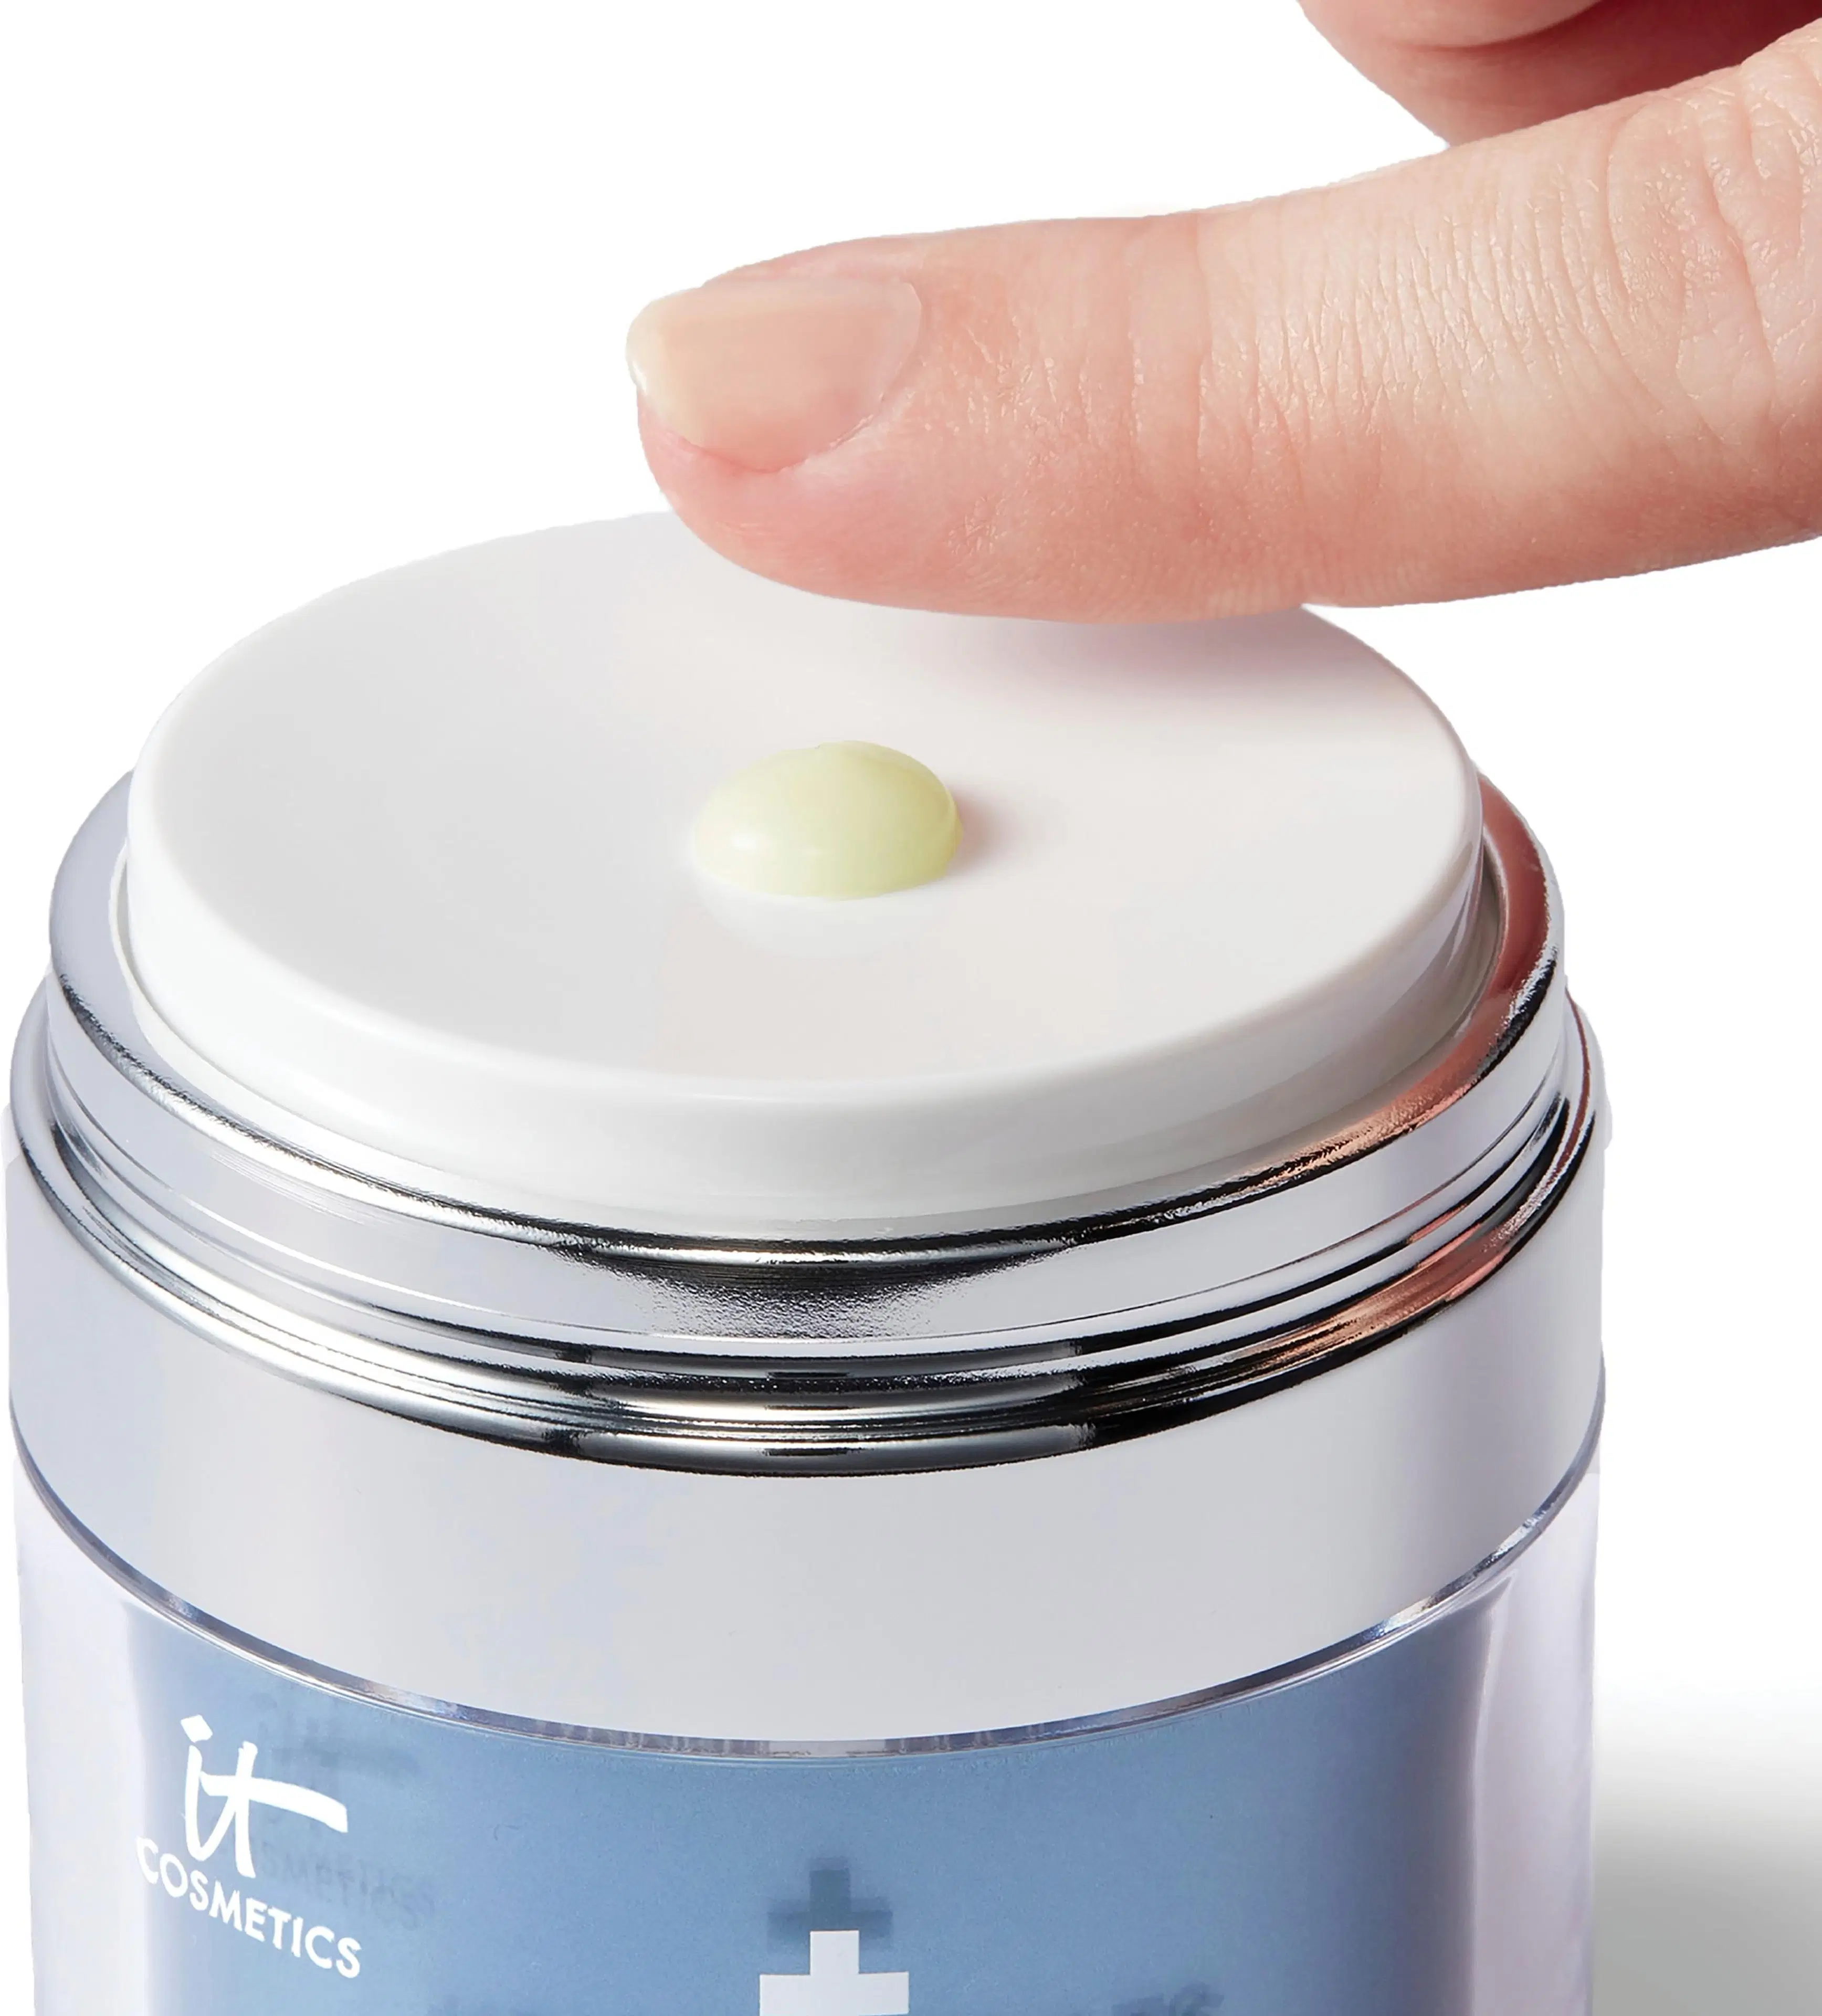 It Cosmetics Hello Results Wrinkle-Reducing Daily Retinol Serum-In-Cream voide 50 ml